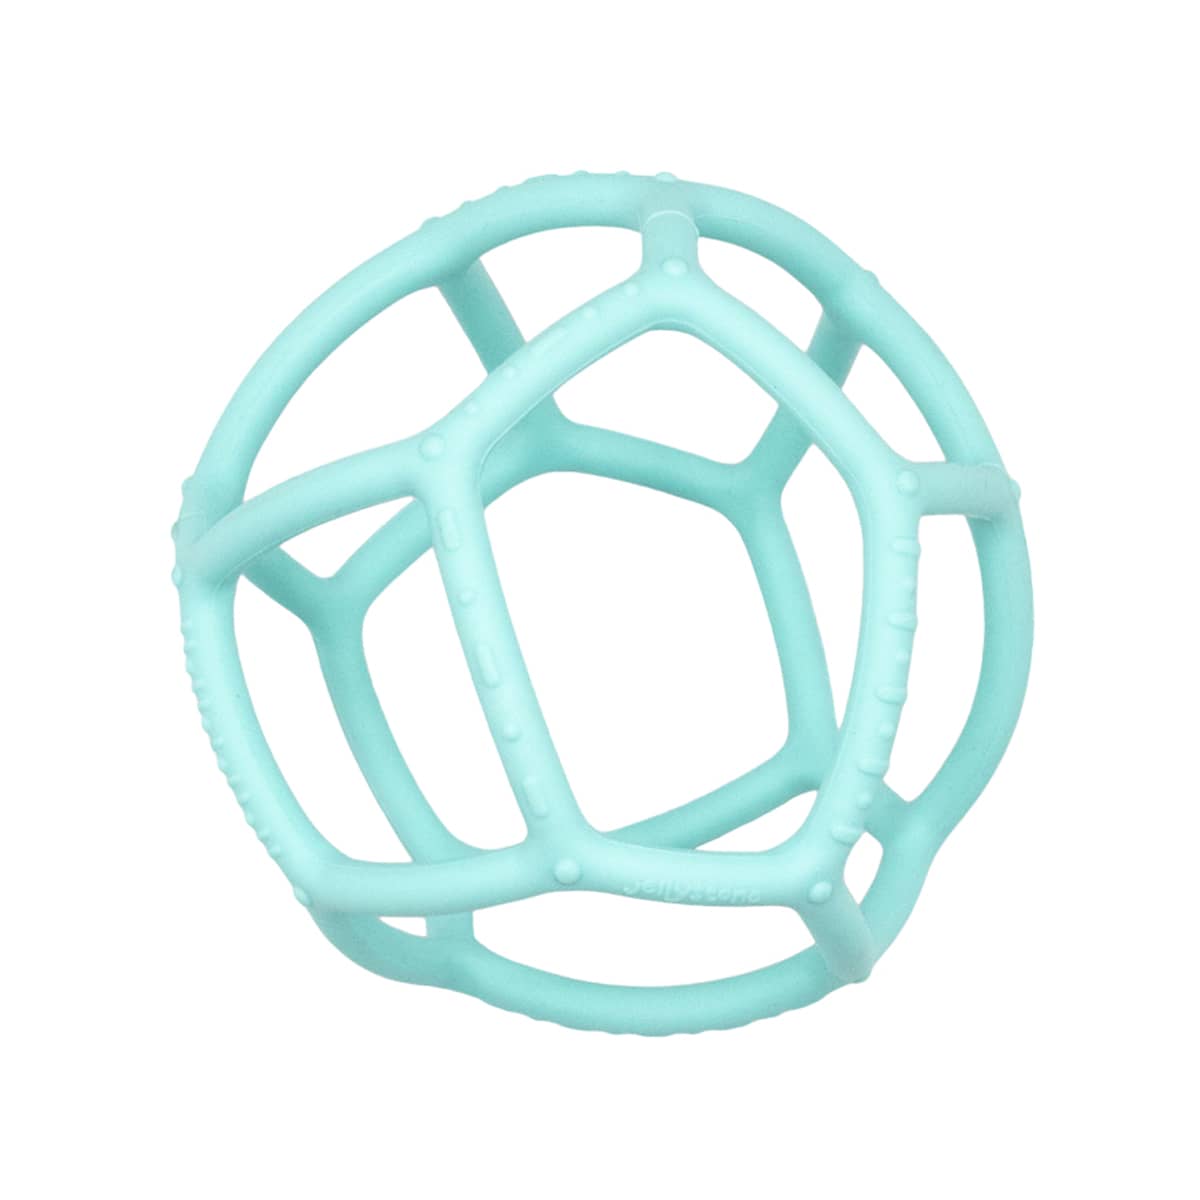 Jellystone Designs Sensory Ball - Mint